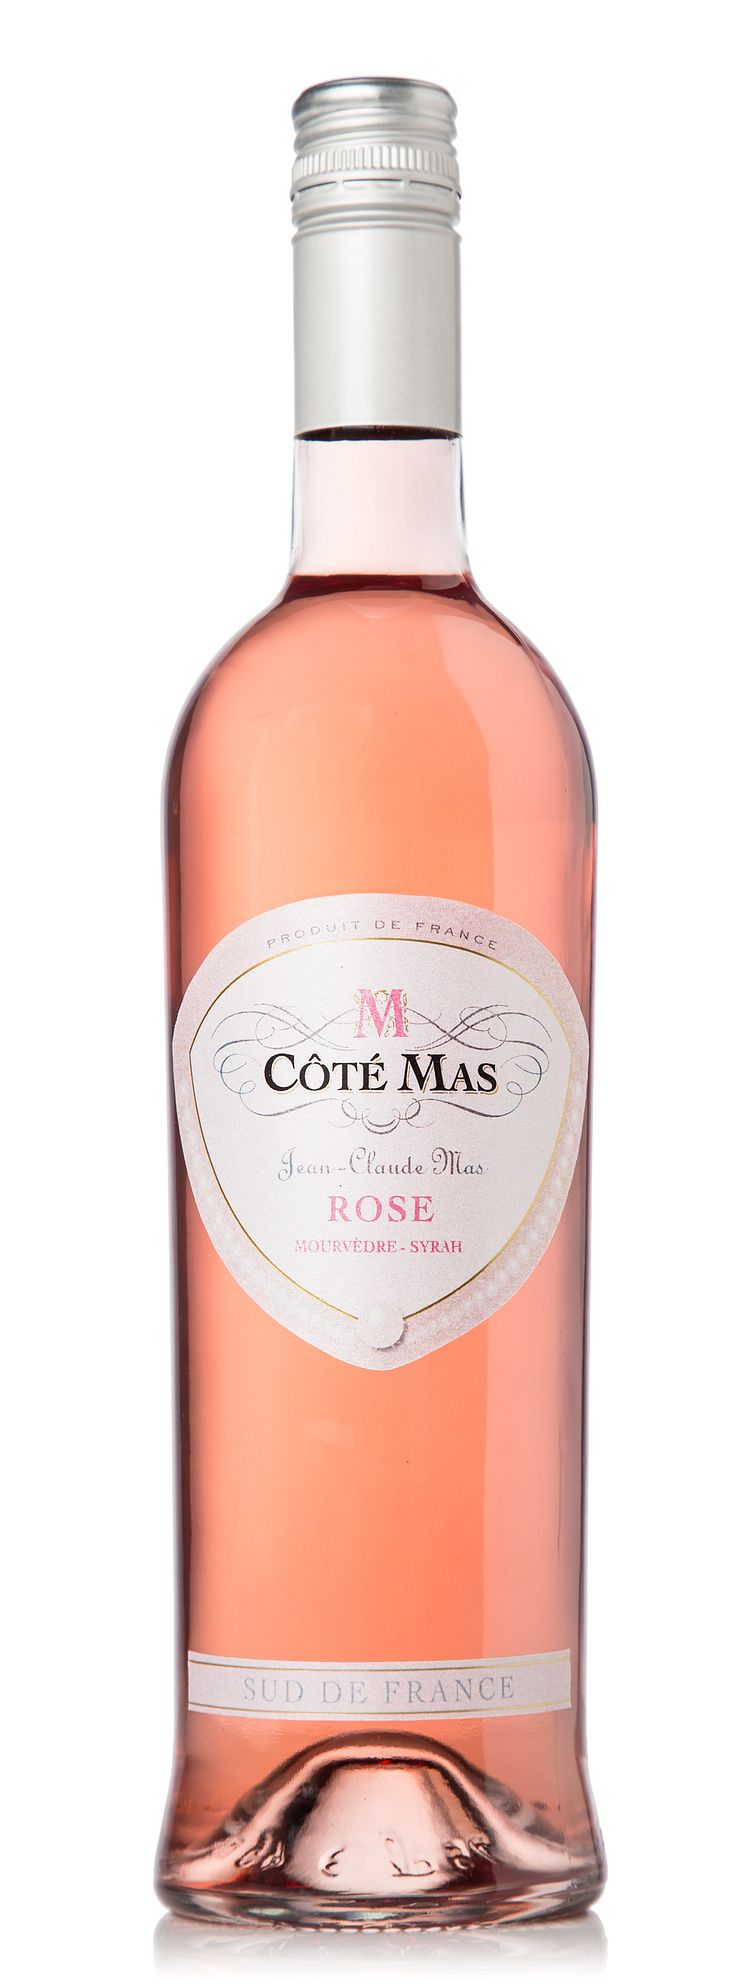 Côté Mas Organic Rosé 2015 - EKOLOGISKT FRÅN DOMAINES PAUL MAS